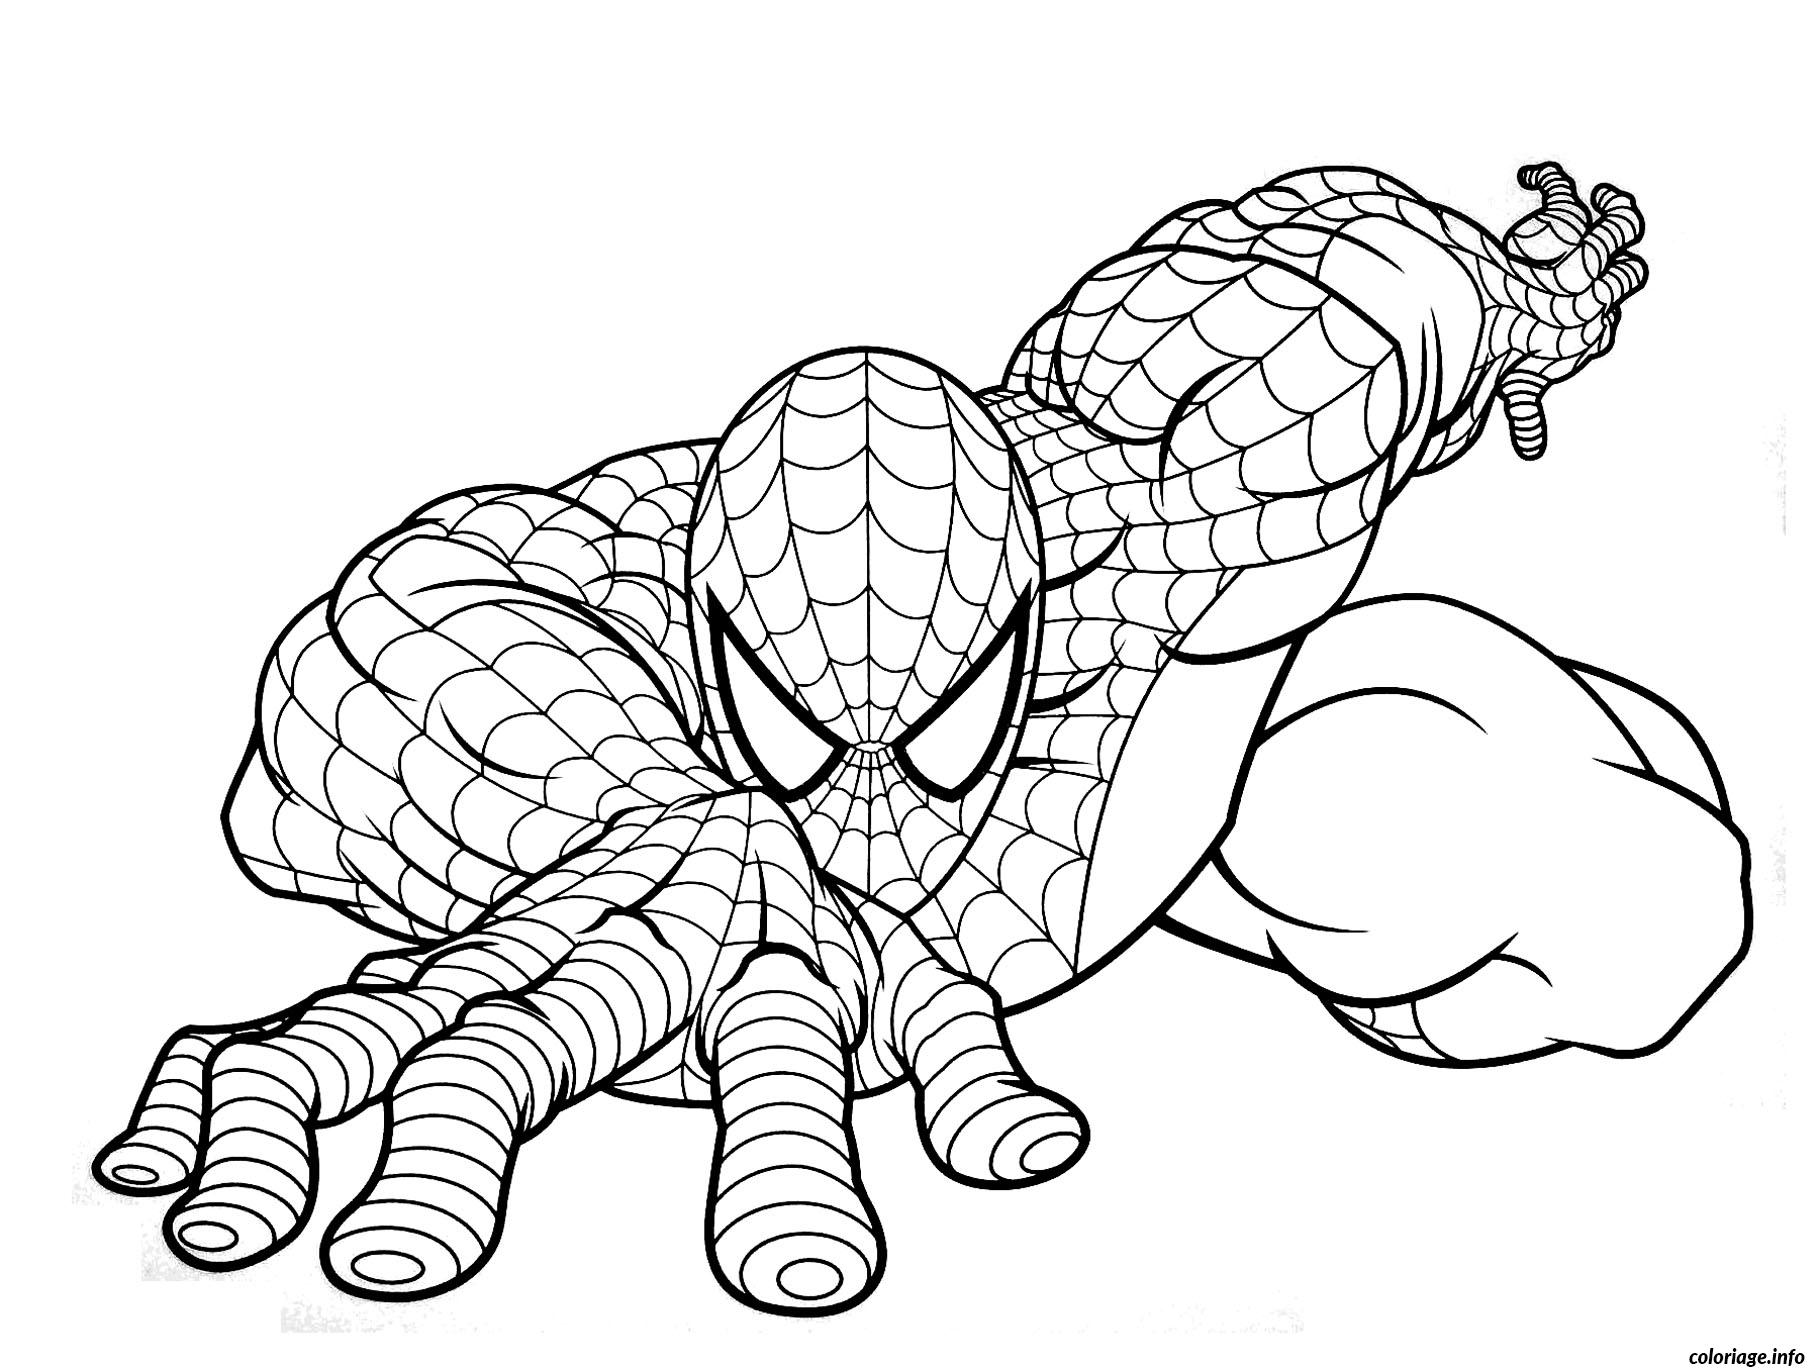 Coloriage Spiderman 35 Dessin à Imprimer